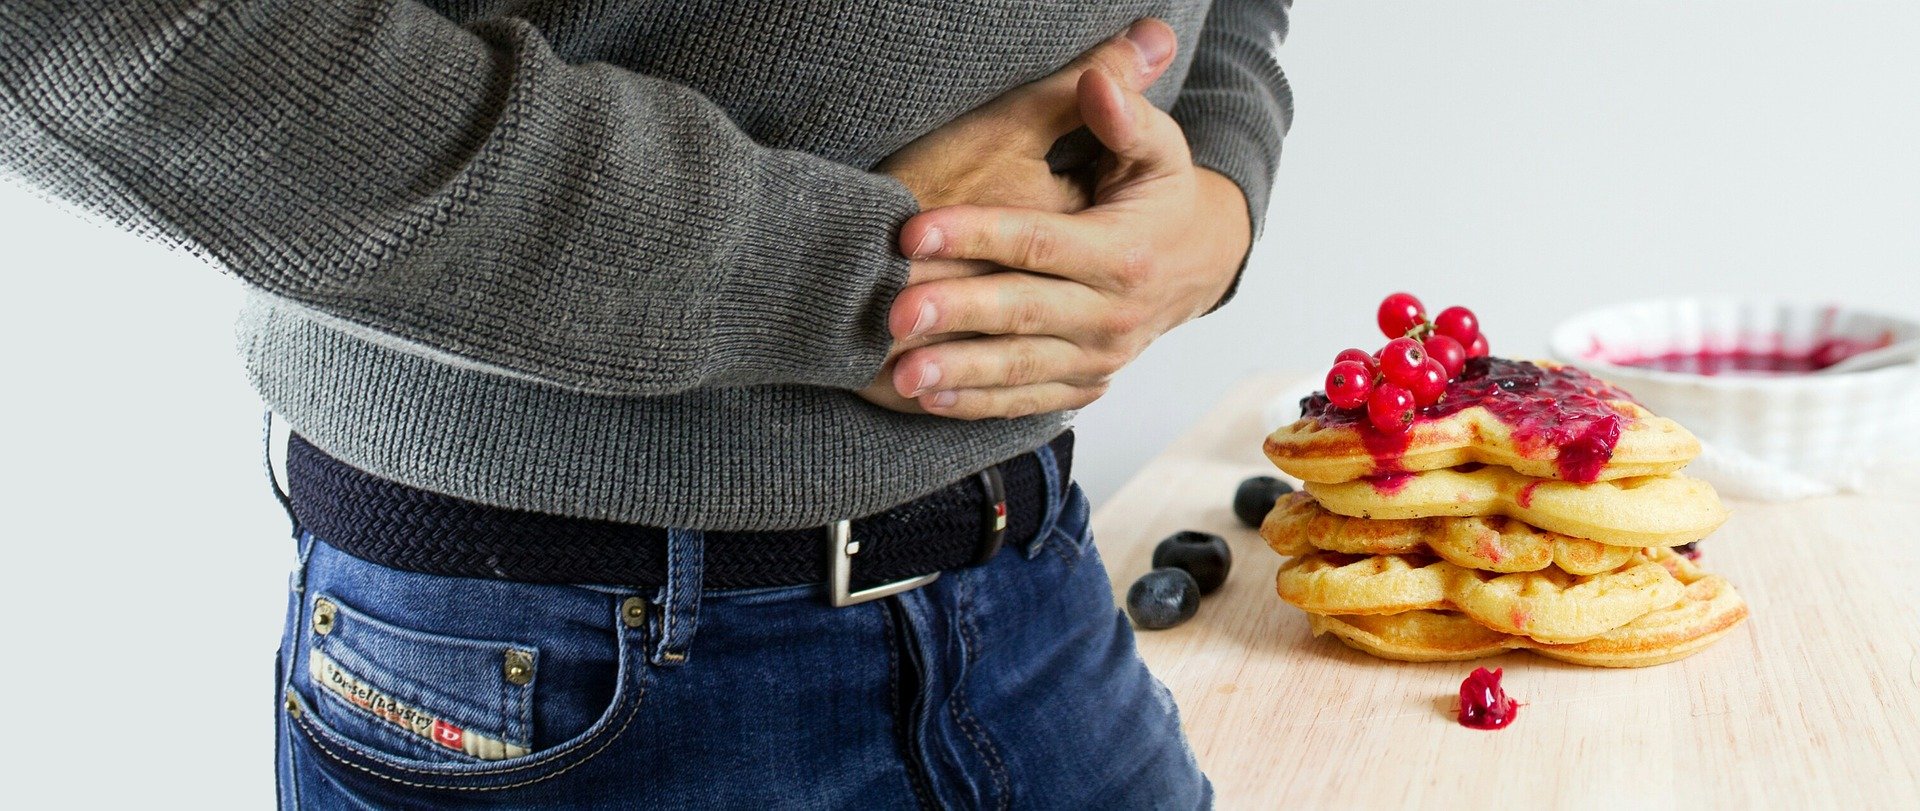 How to stop overindulging